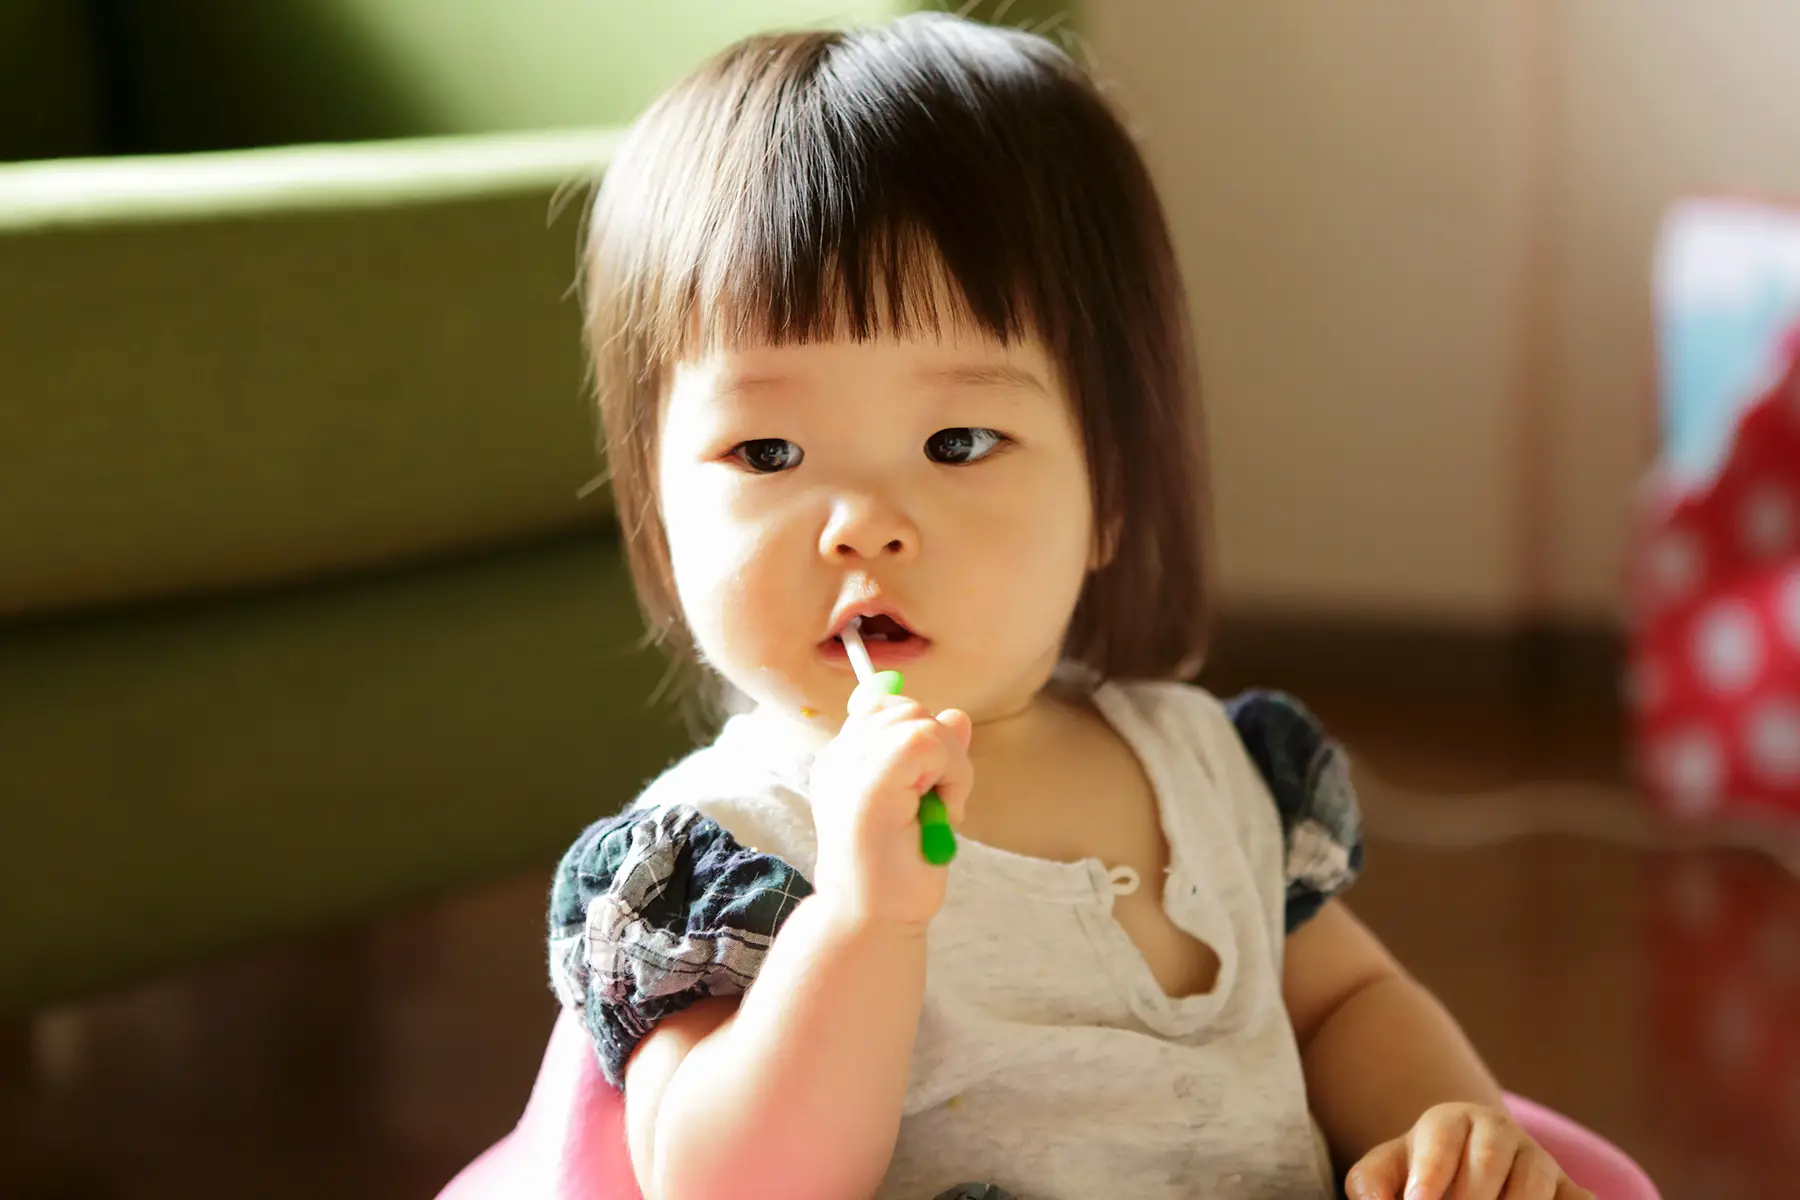 A toddler brushing their own teeth